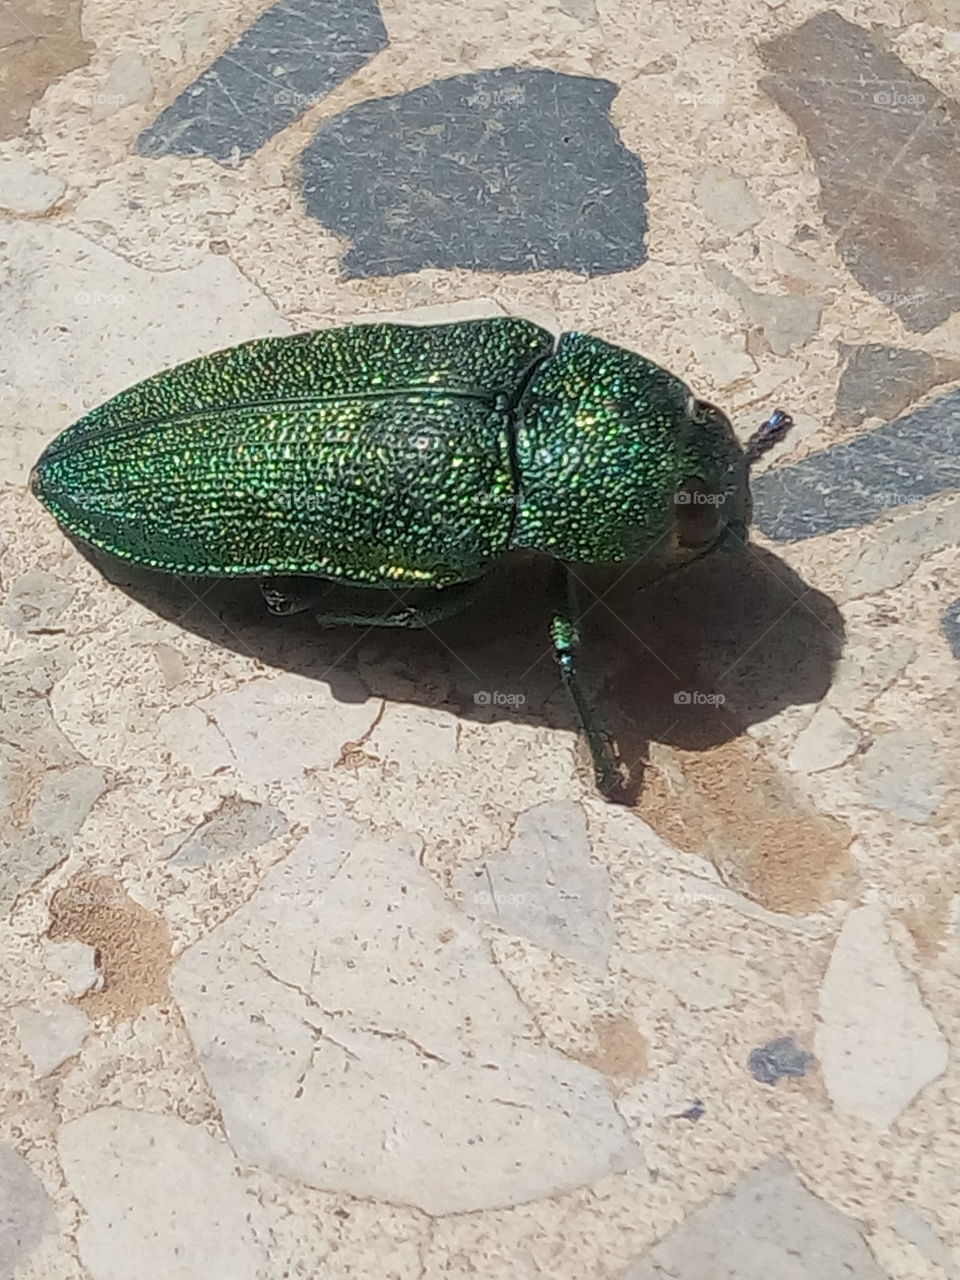 jewel Beetle